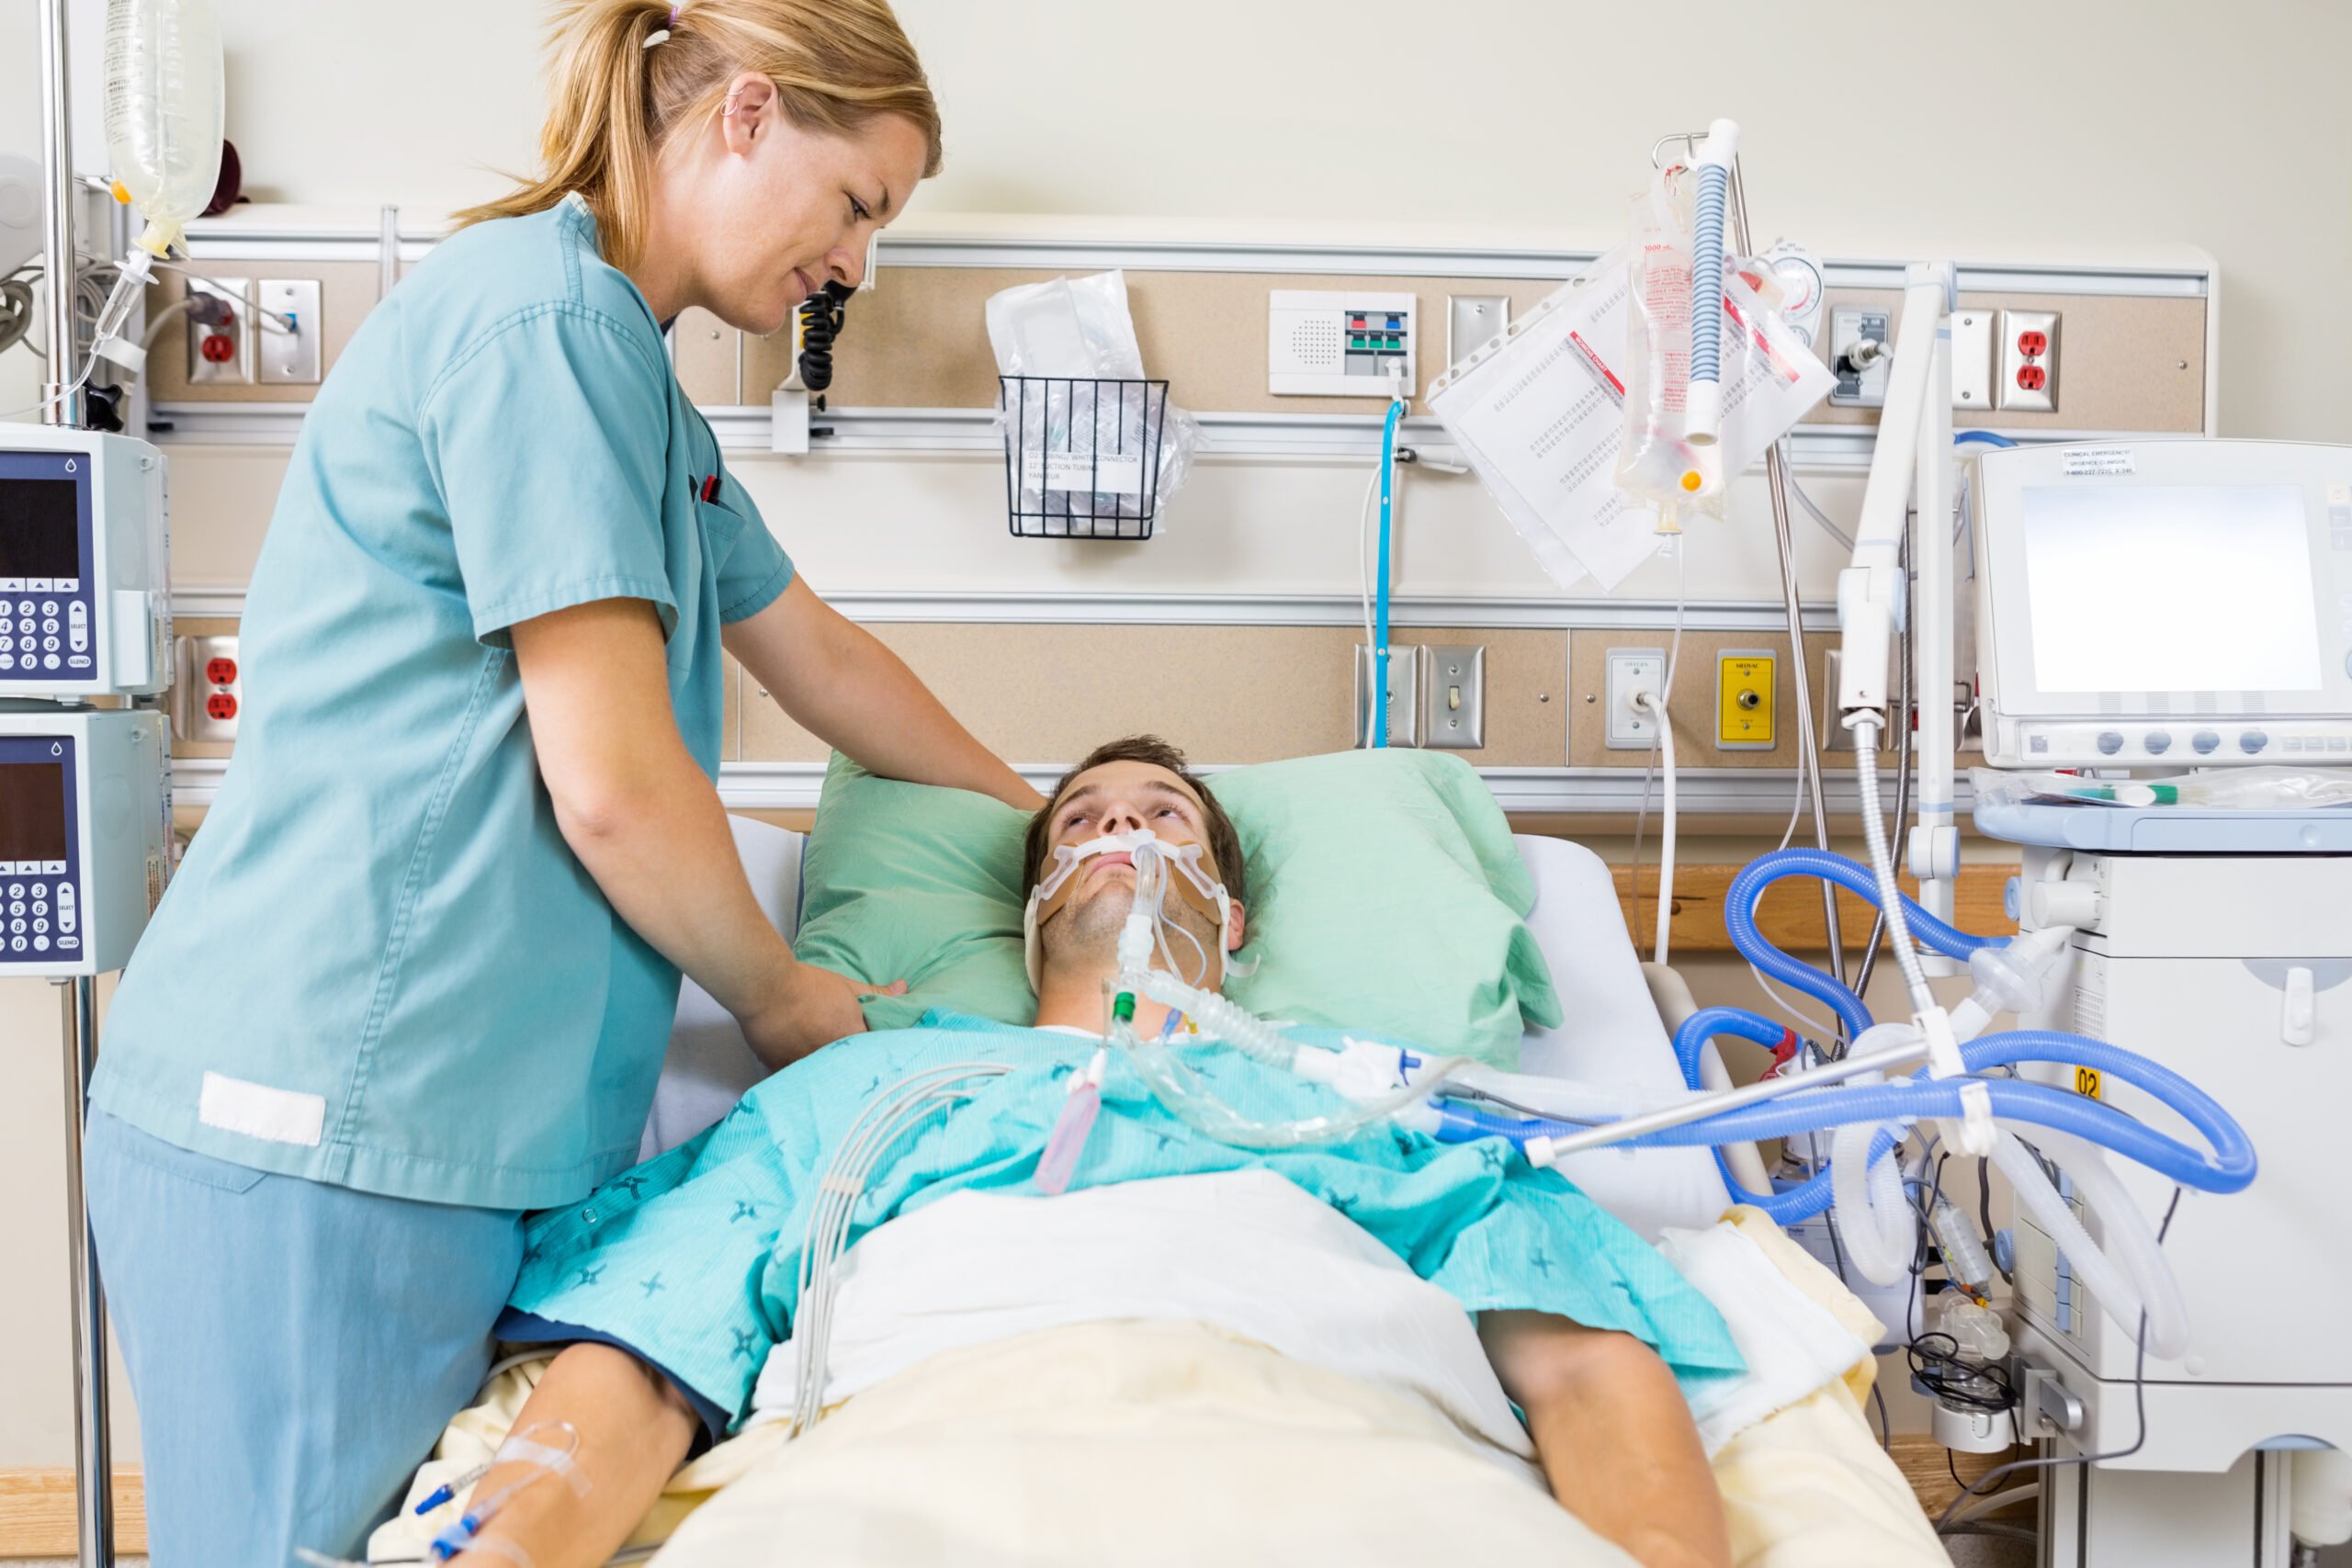 intensive care unit design guidelines